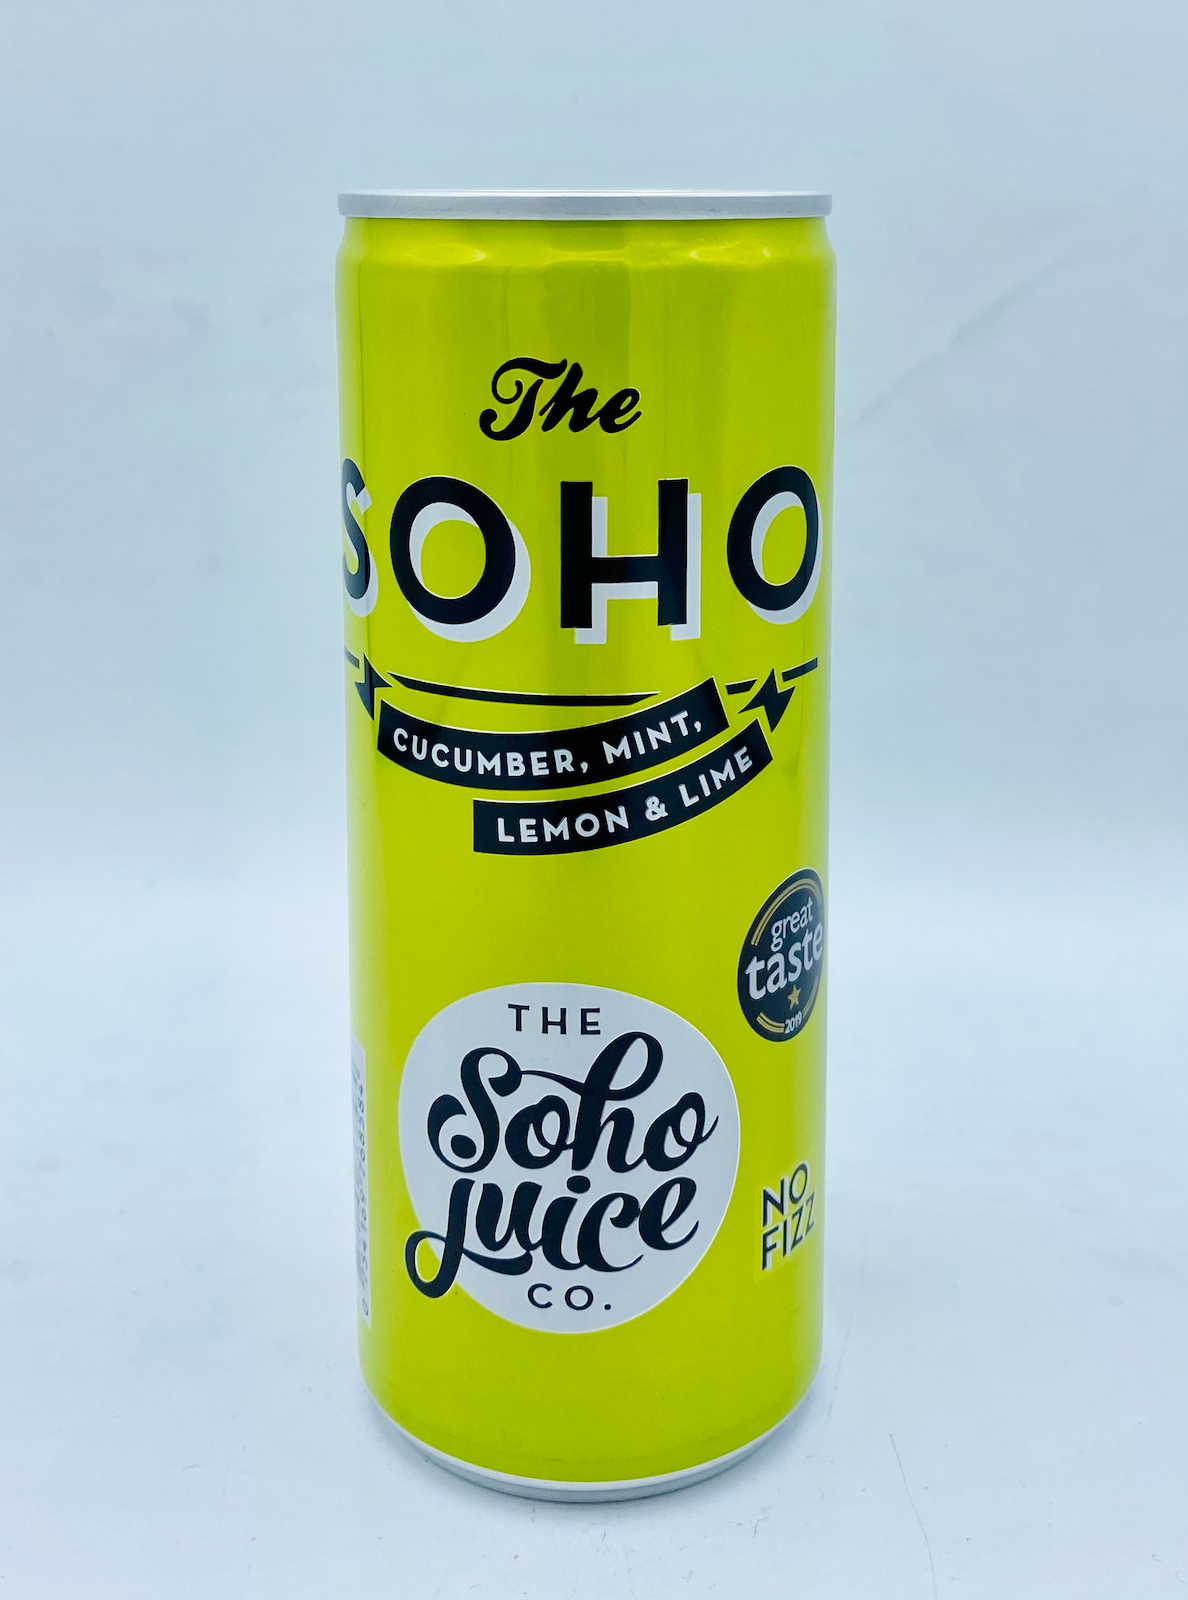 Soho Juice Co. - Cucumber, mint, Lemon & Lime